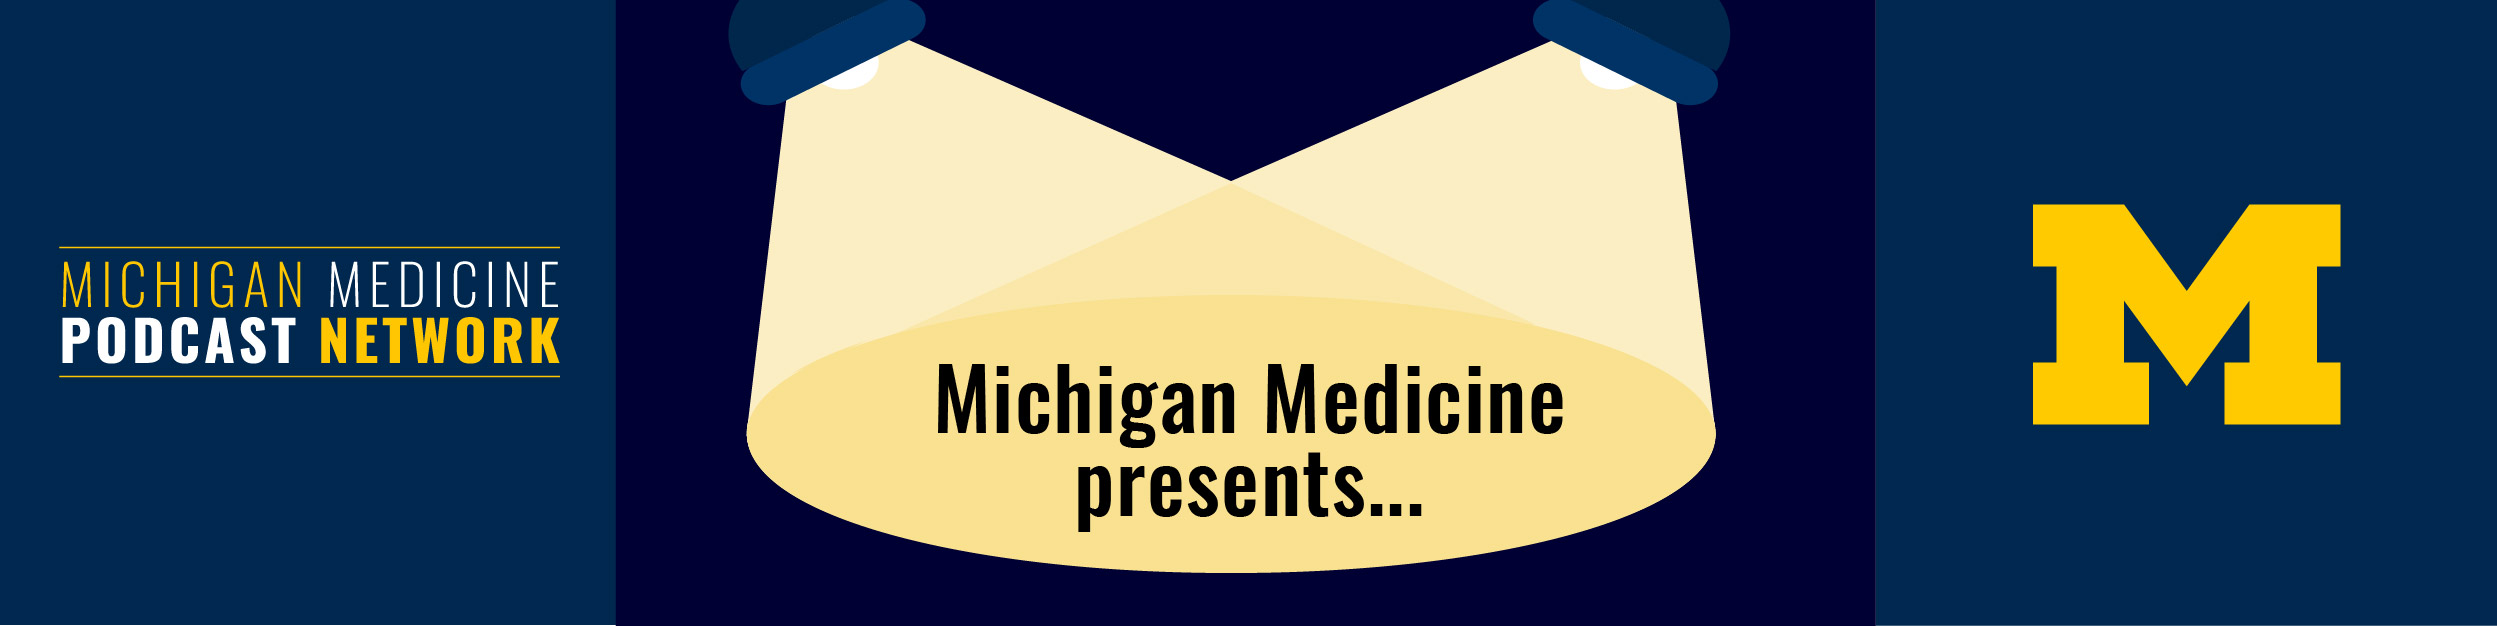 Michigan Medicine Presents... part of the Michigan Medicine Podcast Network